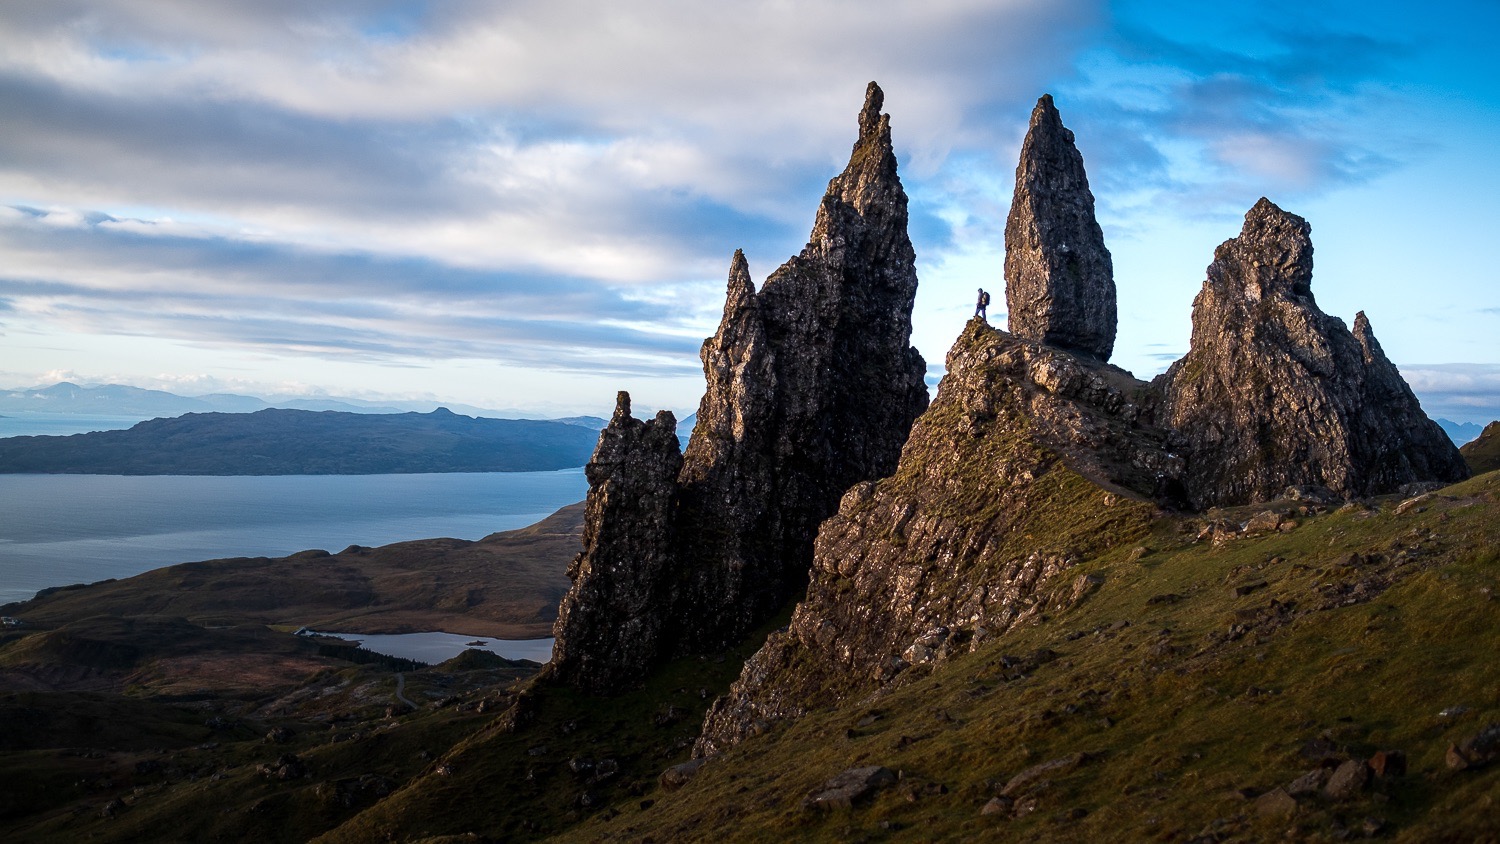 0082-scotland-tamron-le monde de la photo-paysage-20190511072444-compress.jpg